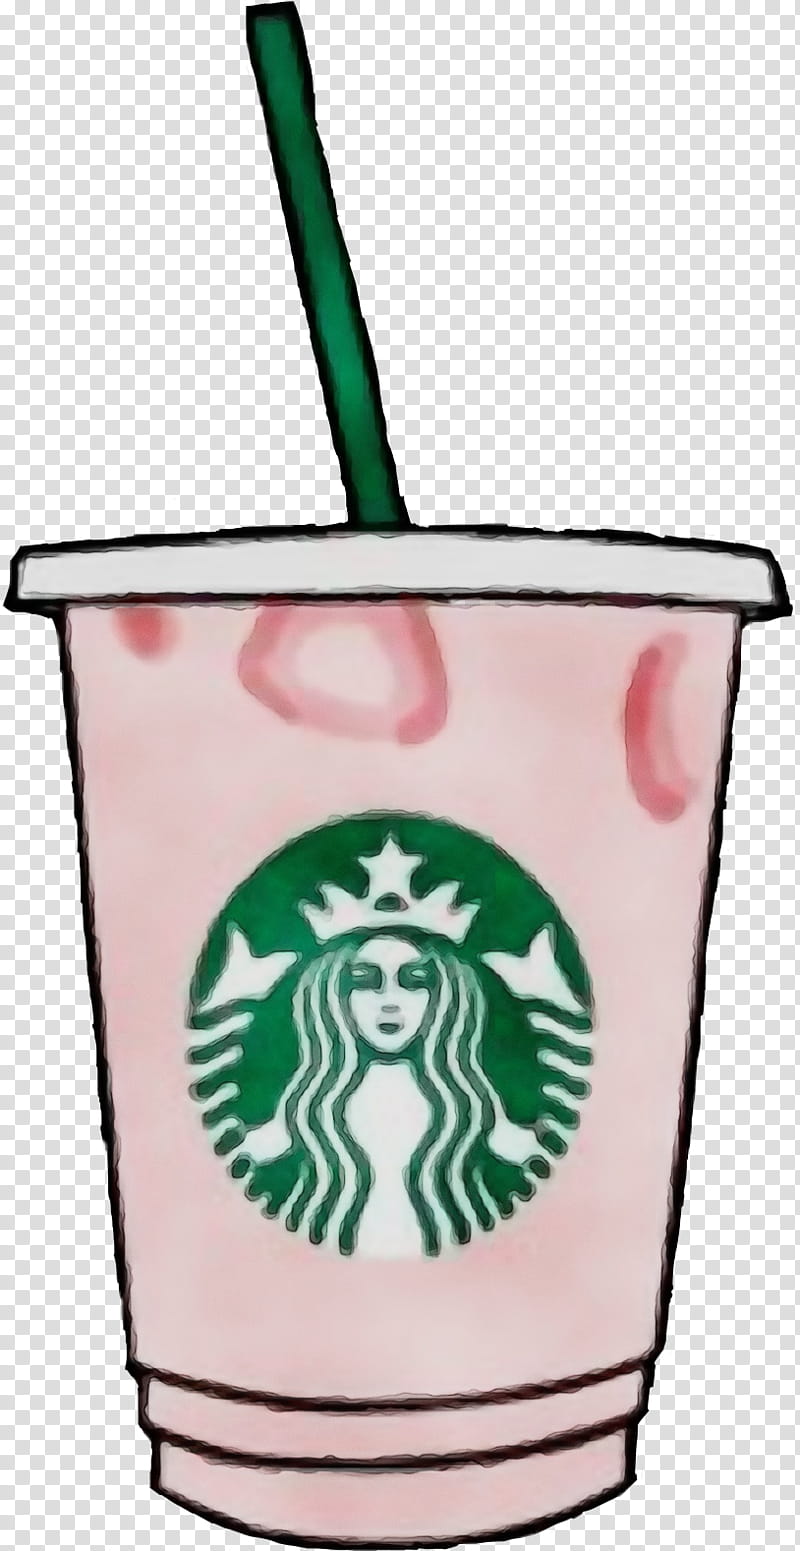 Transparent Background Starbucks Cup Clipart - Miinullekko